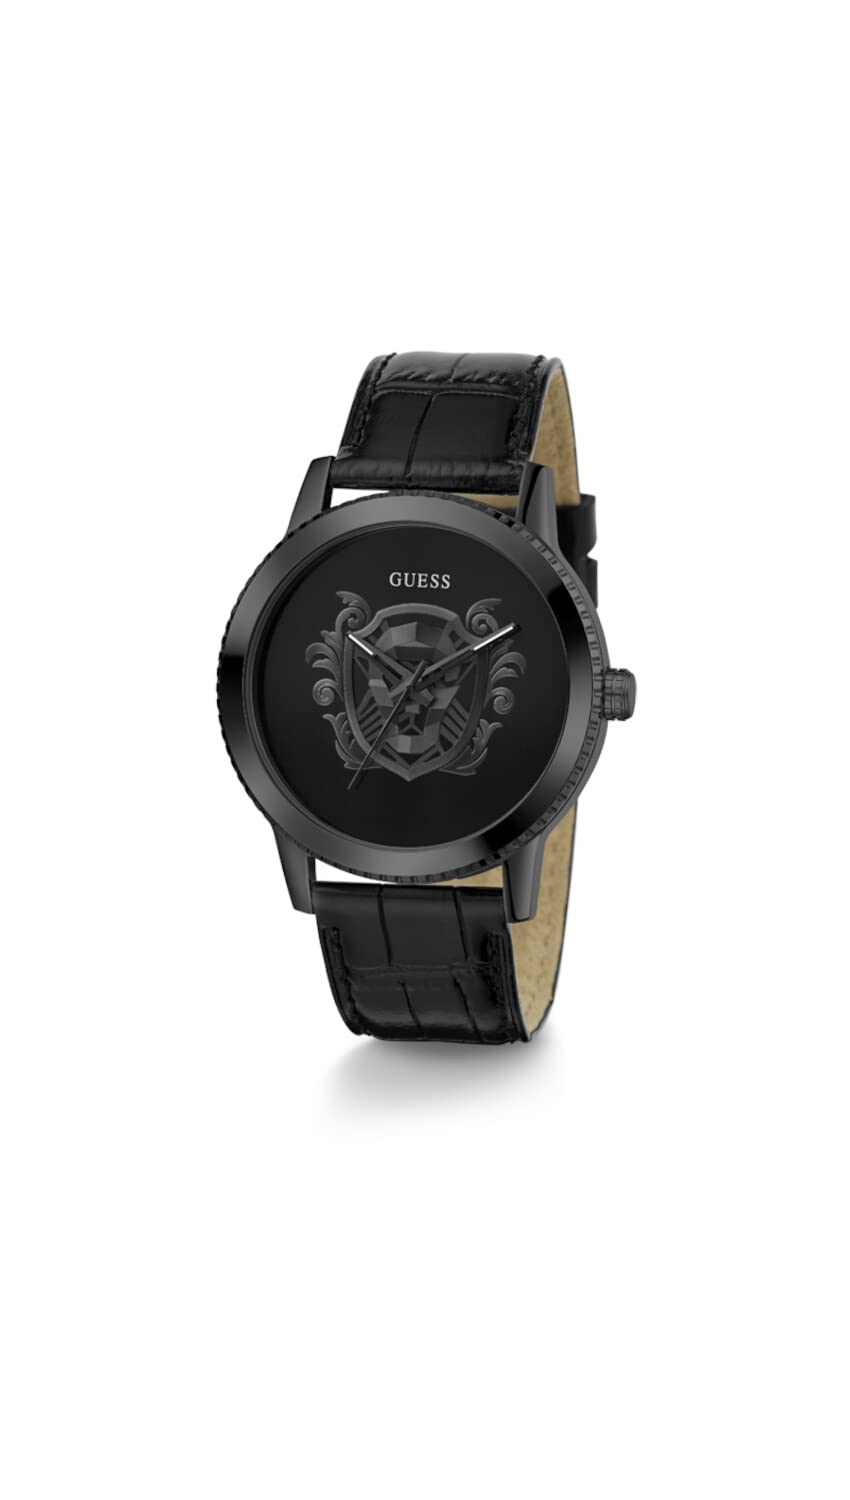 GUESS Men's 44mm Watch - Black Strap Black Dial Black Case